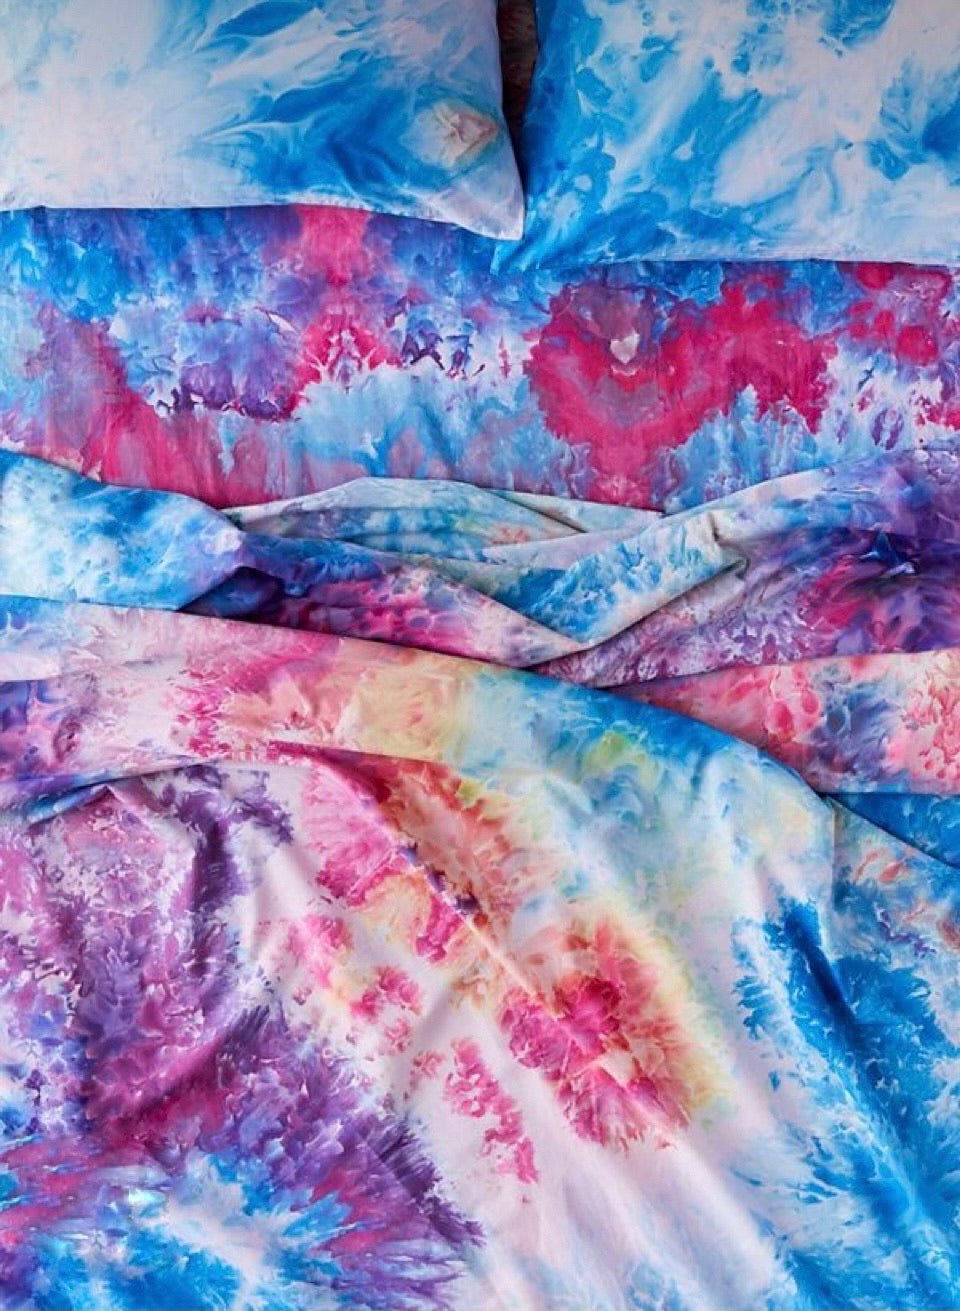 Bedding in Rainbow - riverside tool & dye